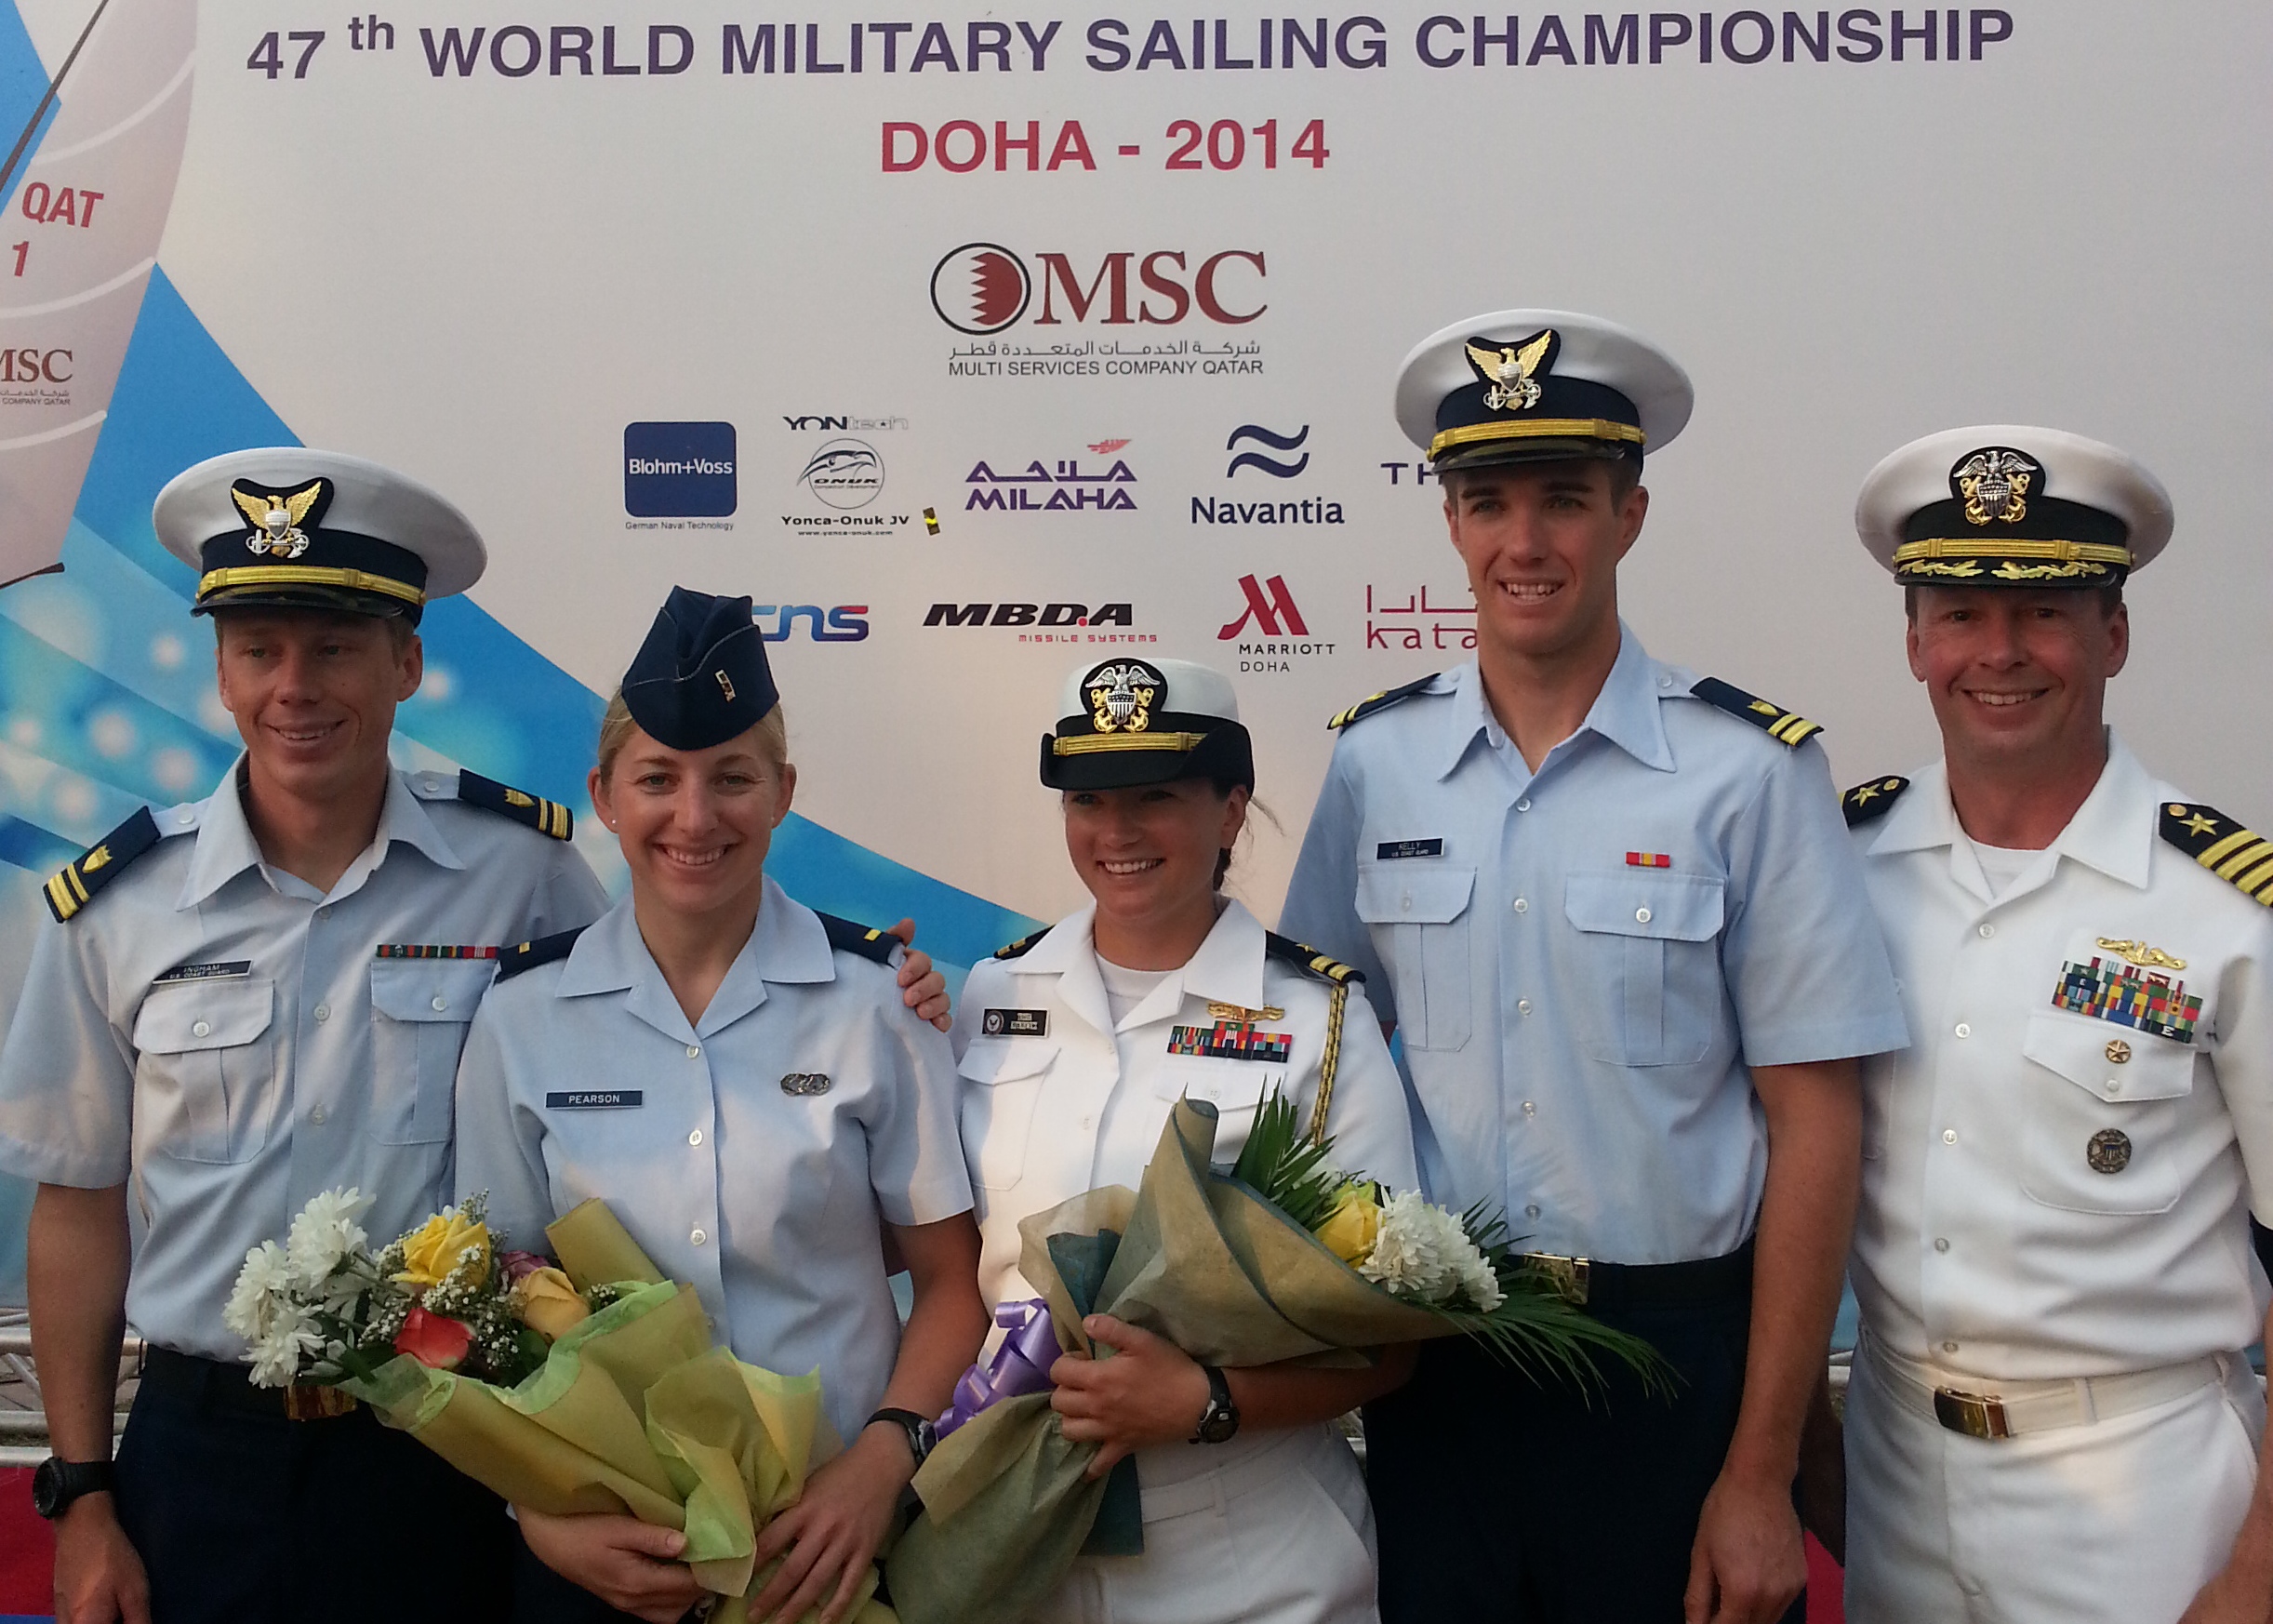 World Military Sailing Championship Pics, Sports Collection